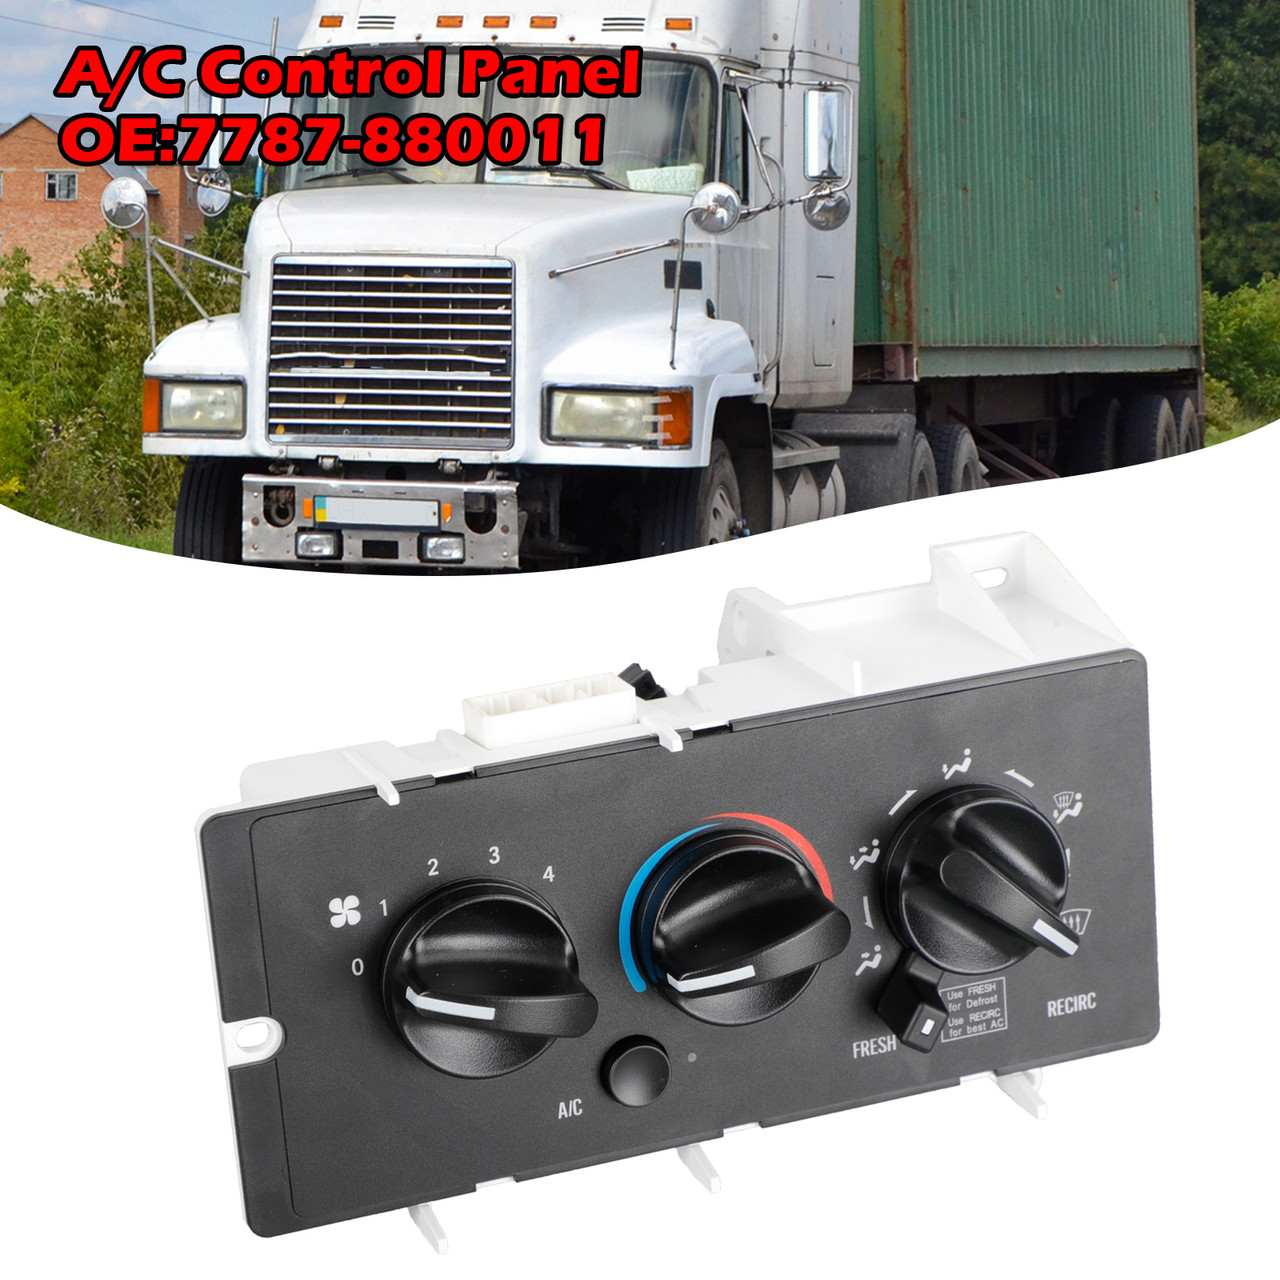 A/C Control Panel for Mack CH613 CV713 2001-2005 7787-880011 850-7450 11-1225